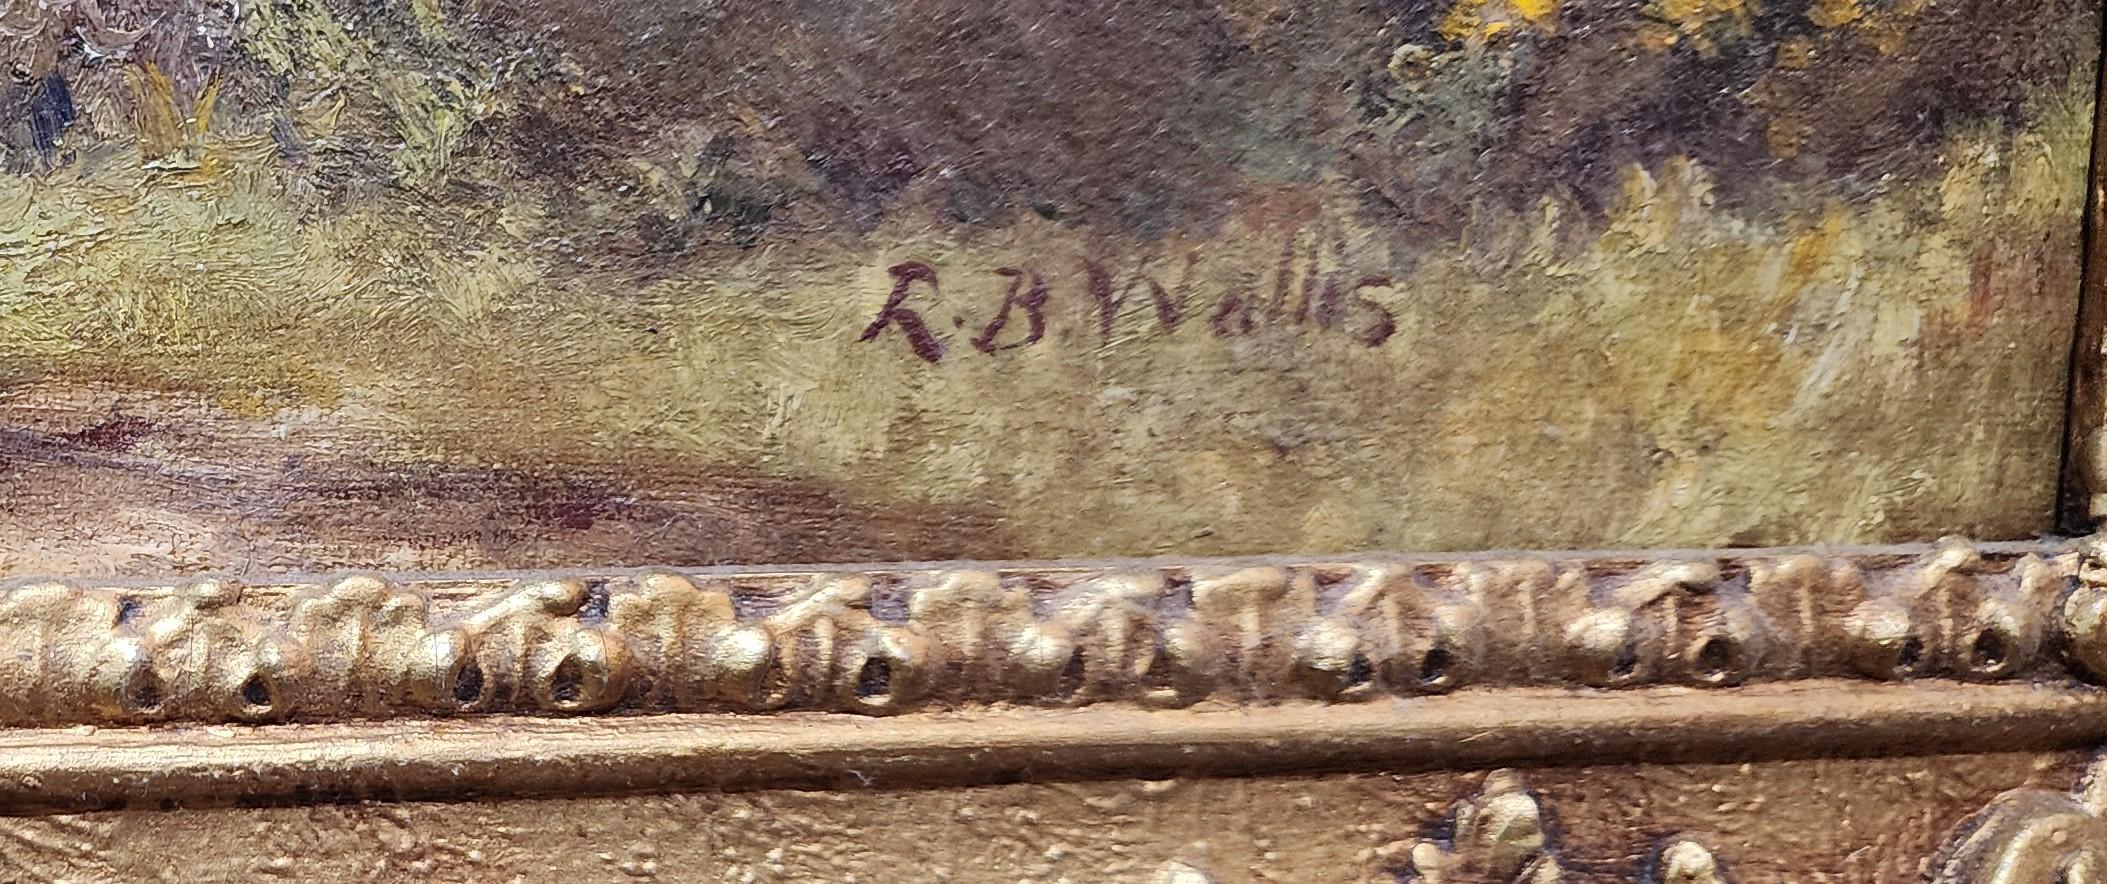 Robert Bruce Wallis (English, 1794-1878)

Signed: R. B. Wallis (Lower, Right)

